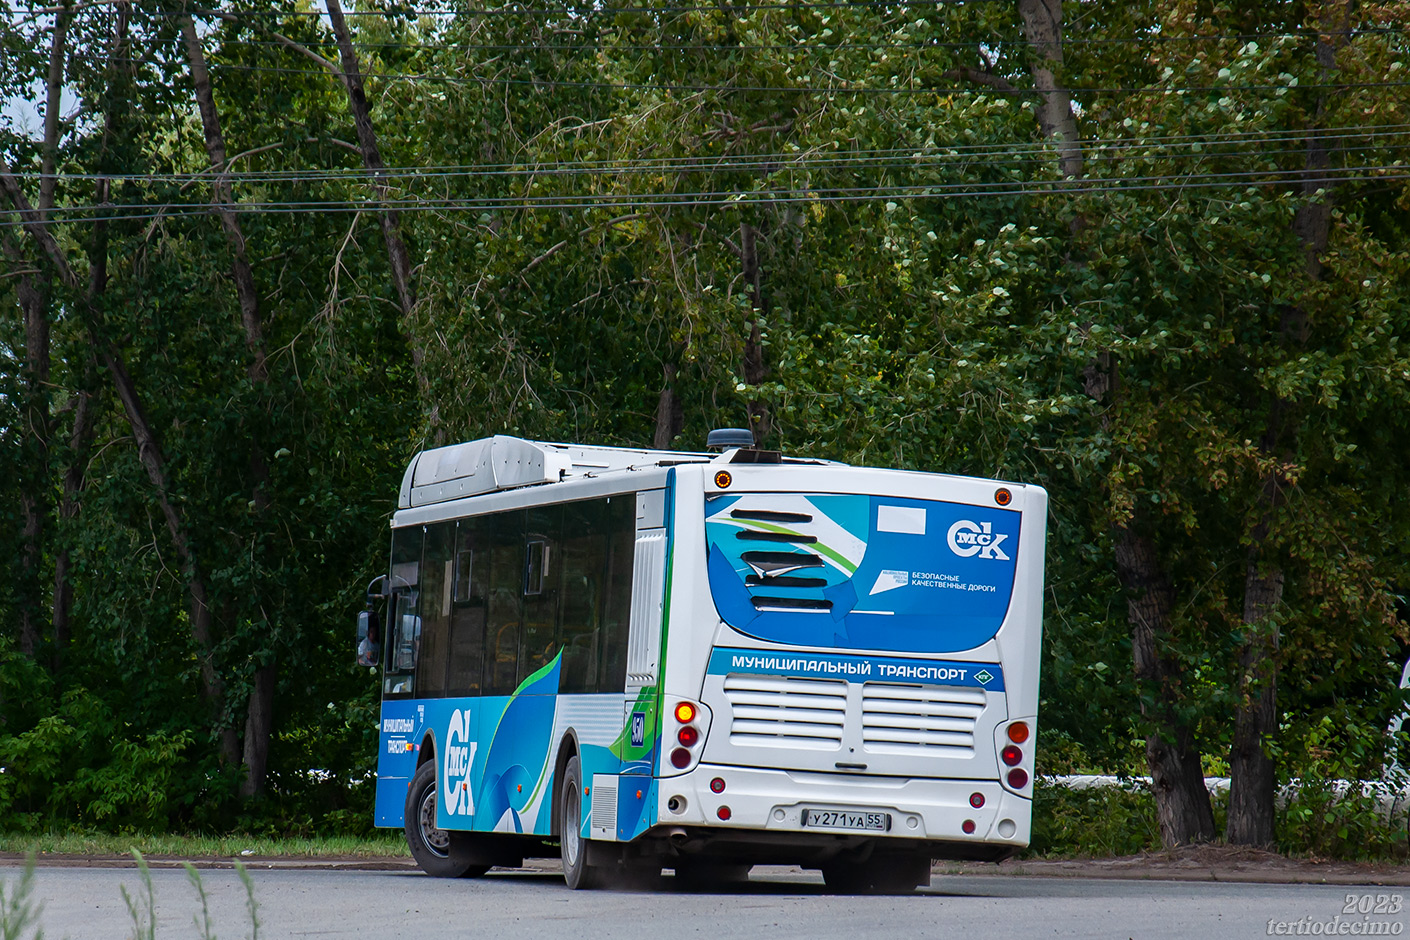 Омская вобласць, Volgabus-5270.G2 (CNG) № 950